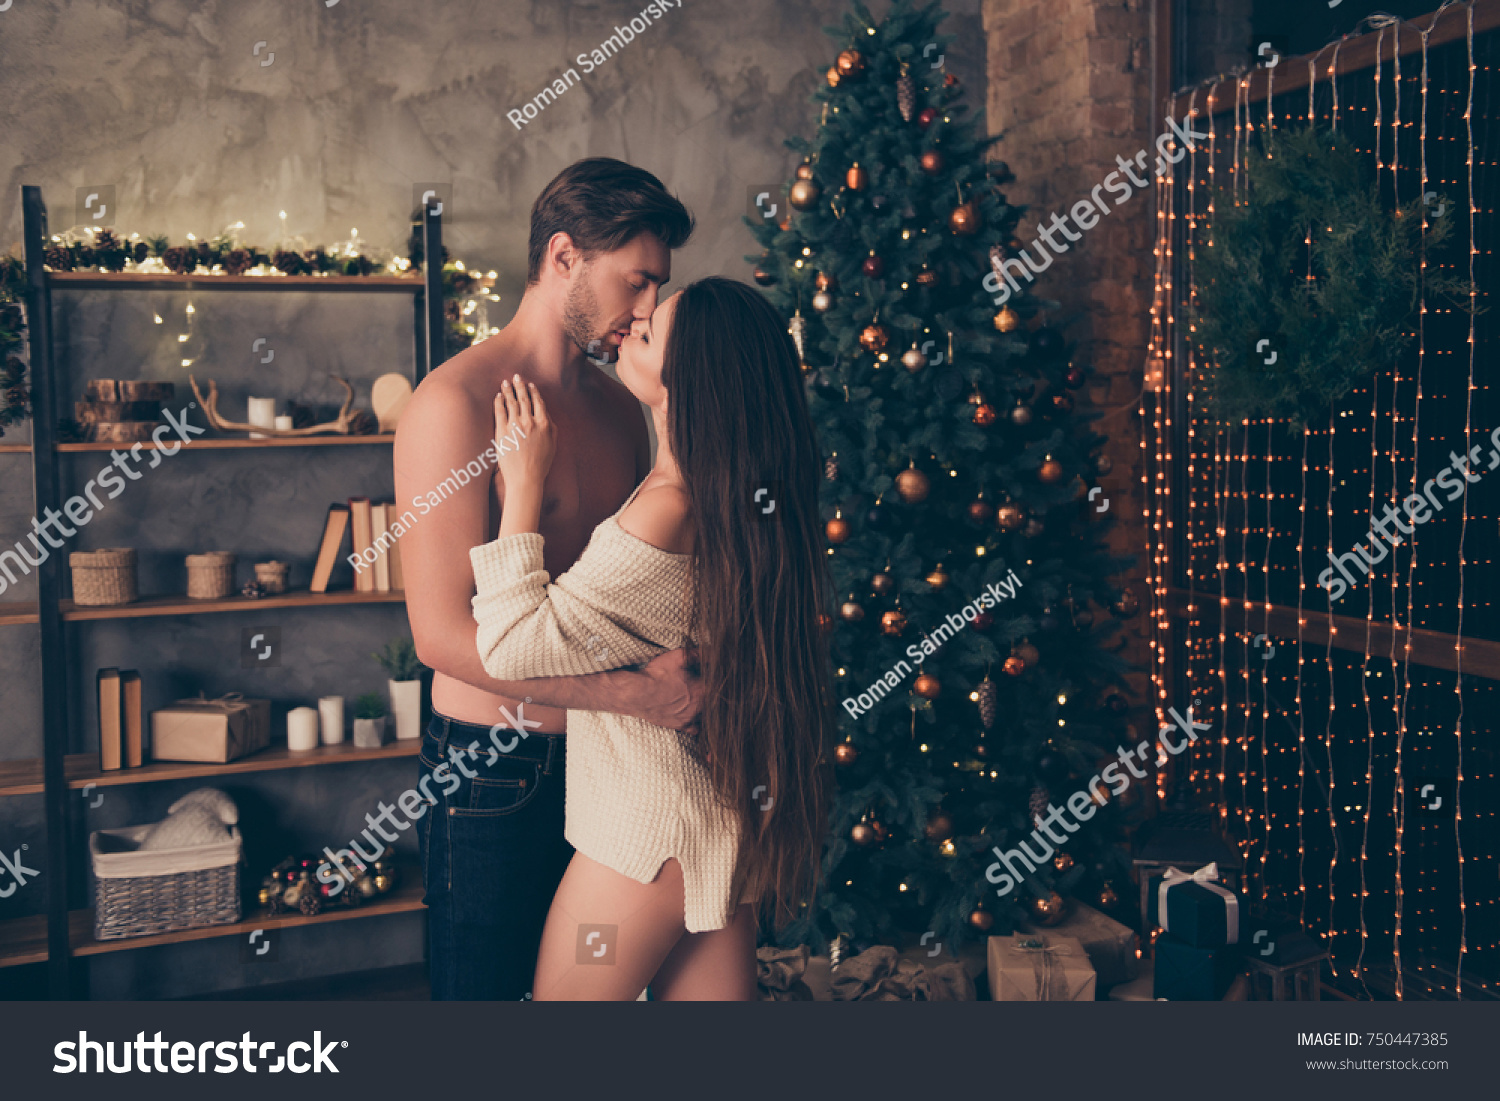 Brunet partner embrace his brunette, hot ass bum butt, sensual night, cute feelings, temptation pleasure, celebrate christmastime, gifts, boxes, presents under firtree, interior #750447385